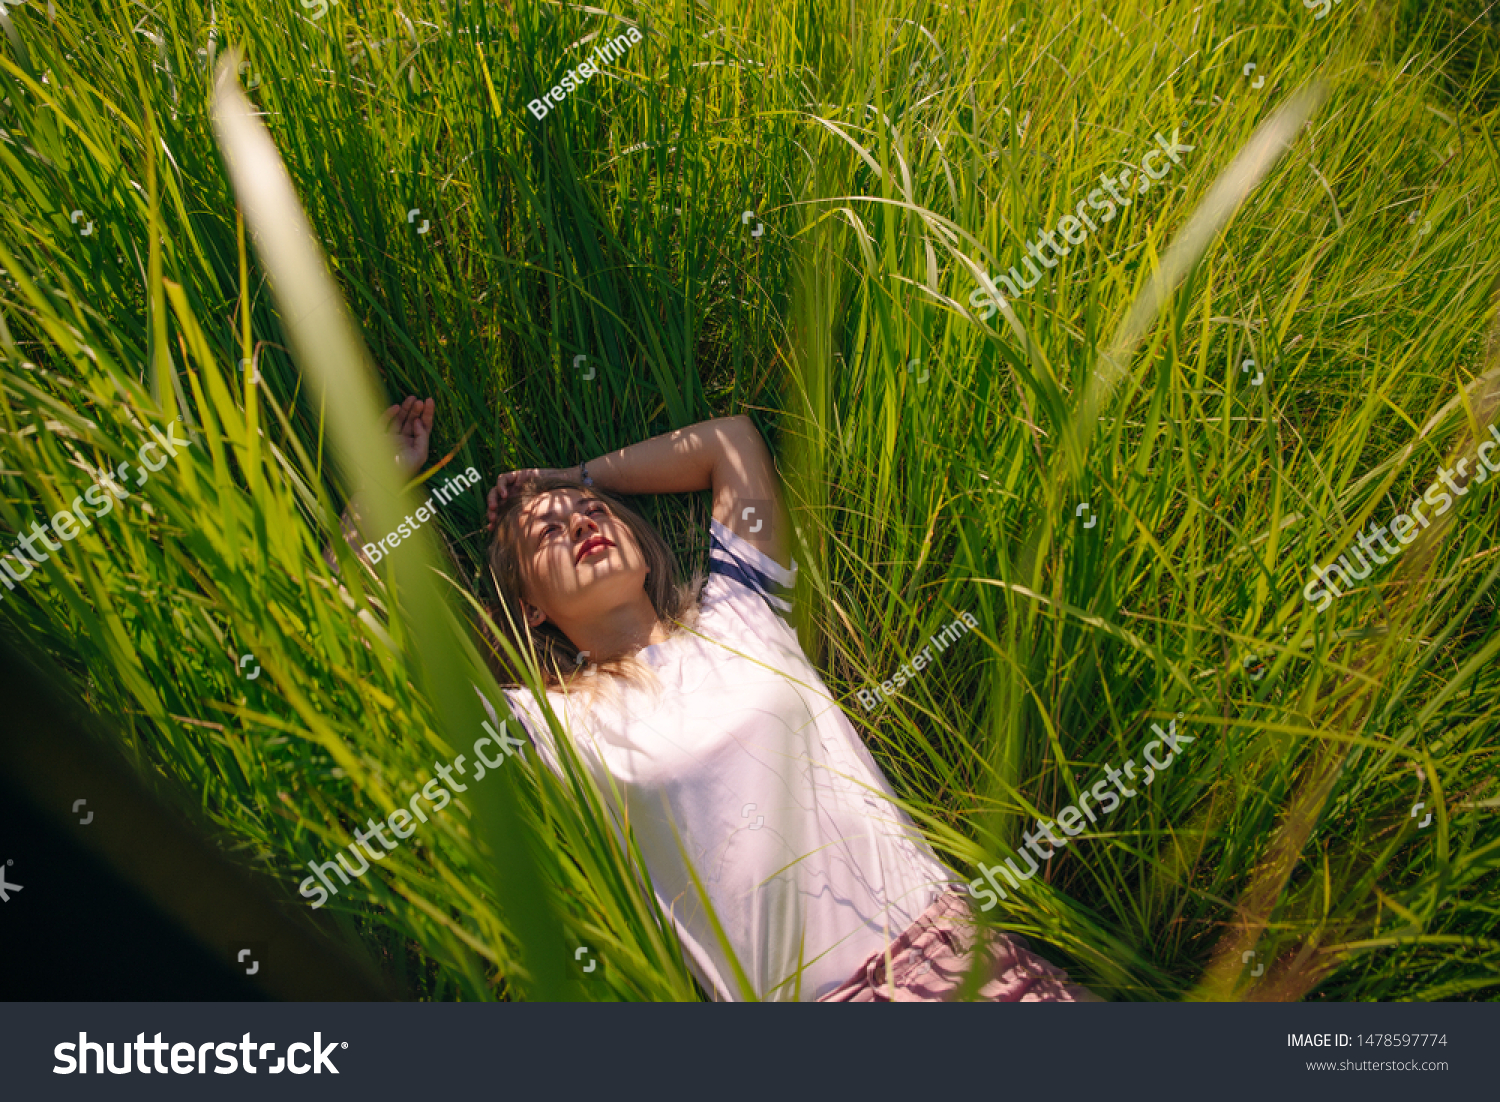 T-shirt design concept - beautiful girl lies in grass in blank white t-shirt in grass #1478597774